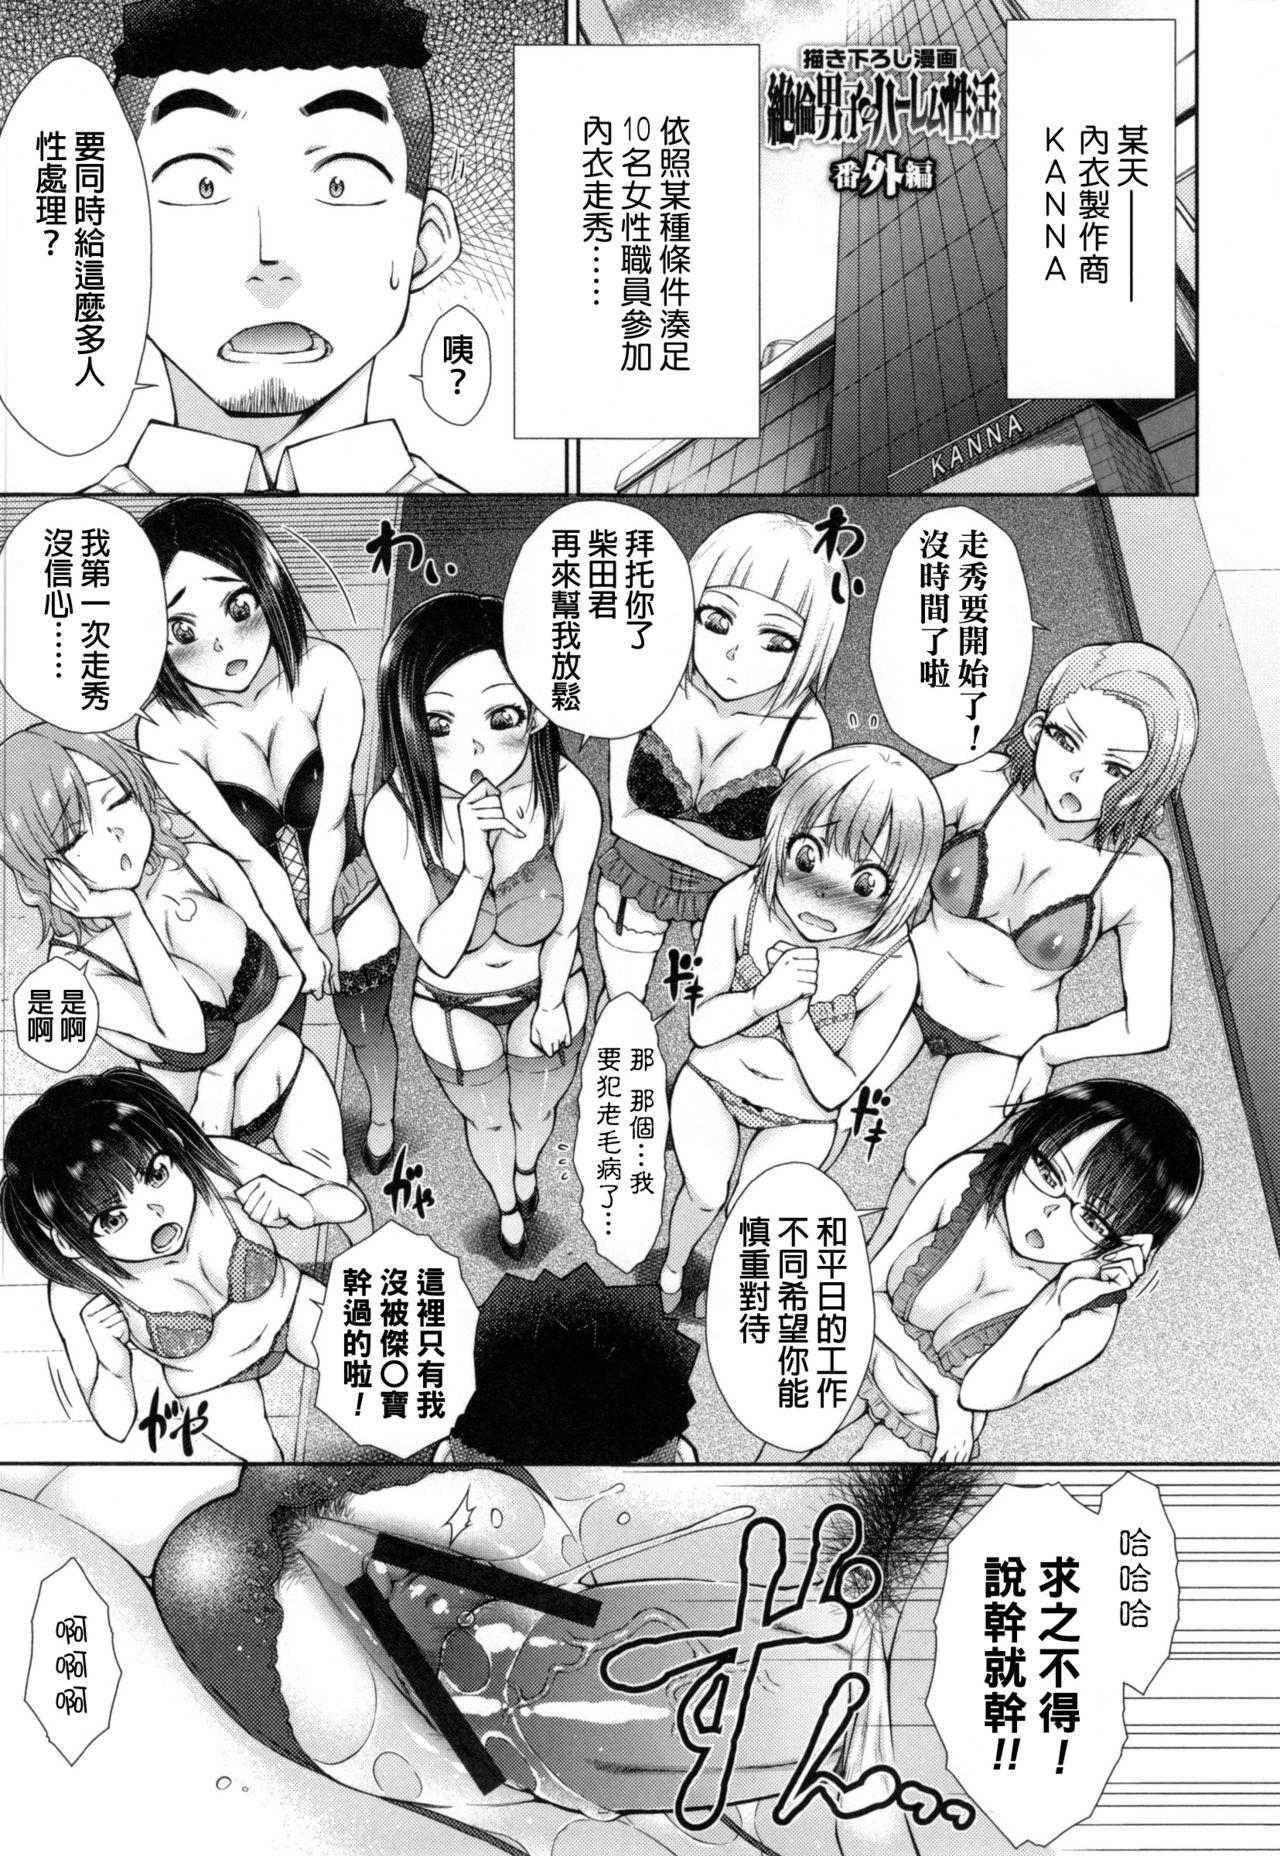 [Igarashi Shouno] Kochira Joshi Shain Senyou Seishorika - Sex Industry Division for Women's Employees Dedicated Ch. 1-2, 8 [Chinese] 52